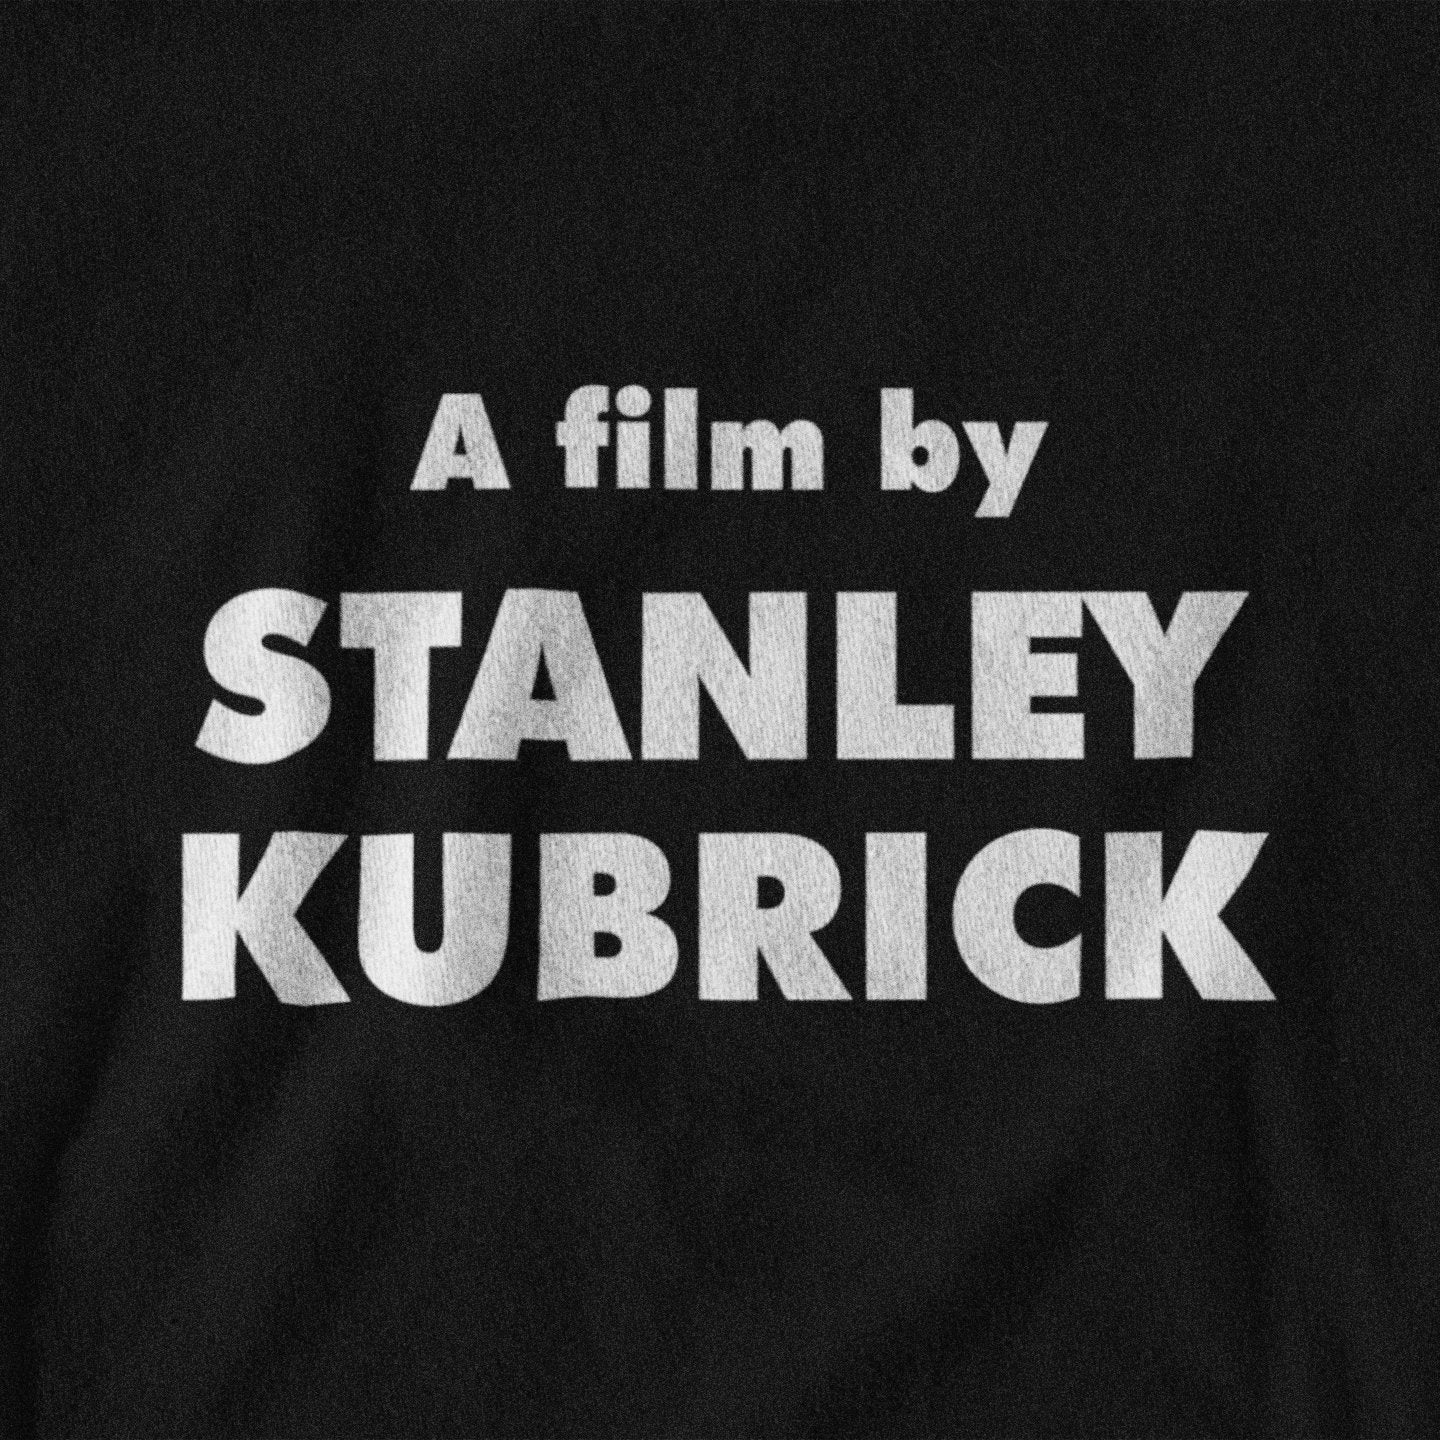 Stanley Kubrick - T-Shirt